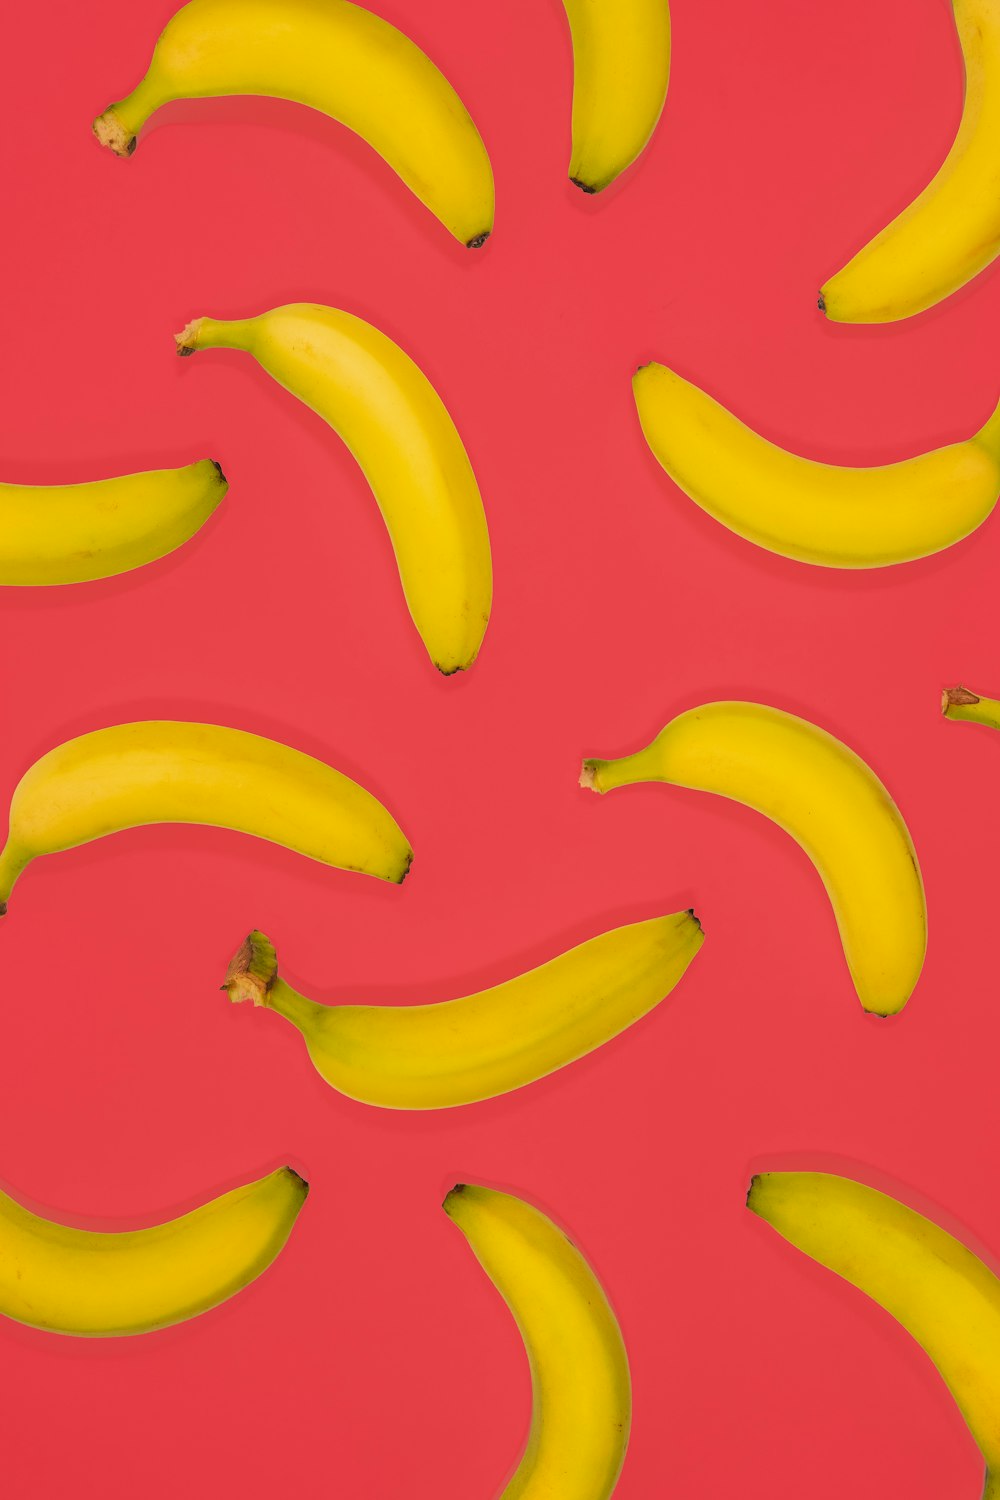 yellow banana fruits on pink surface